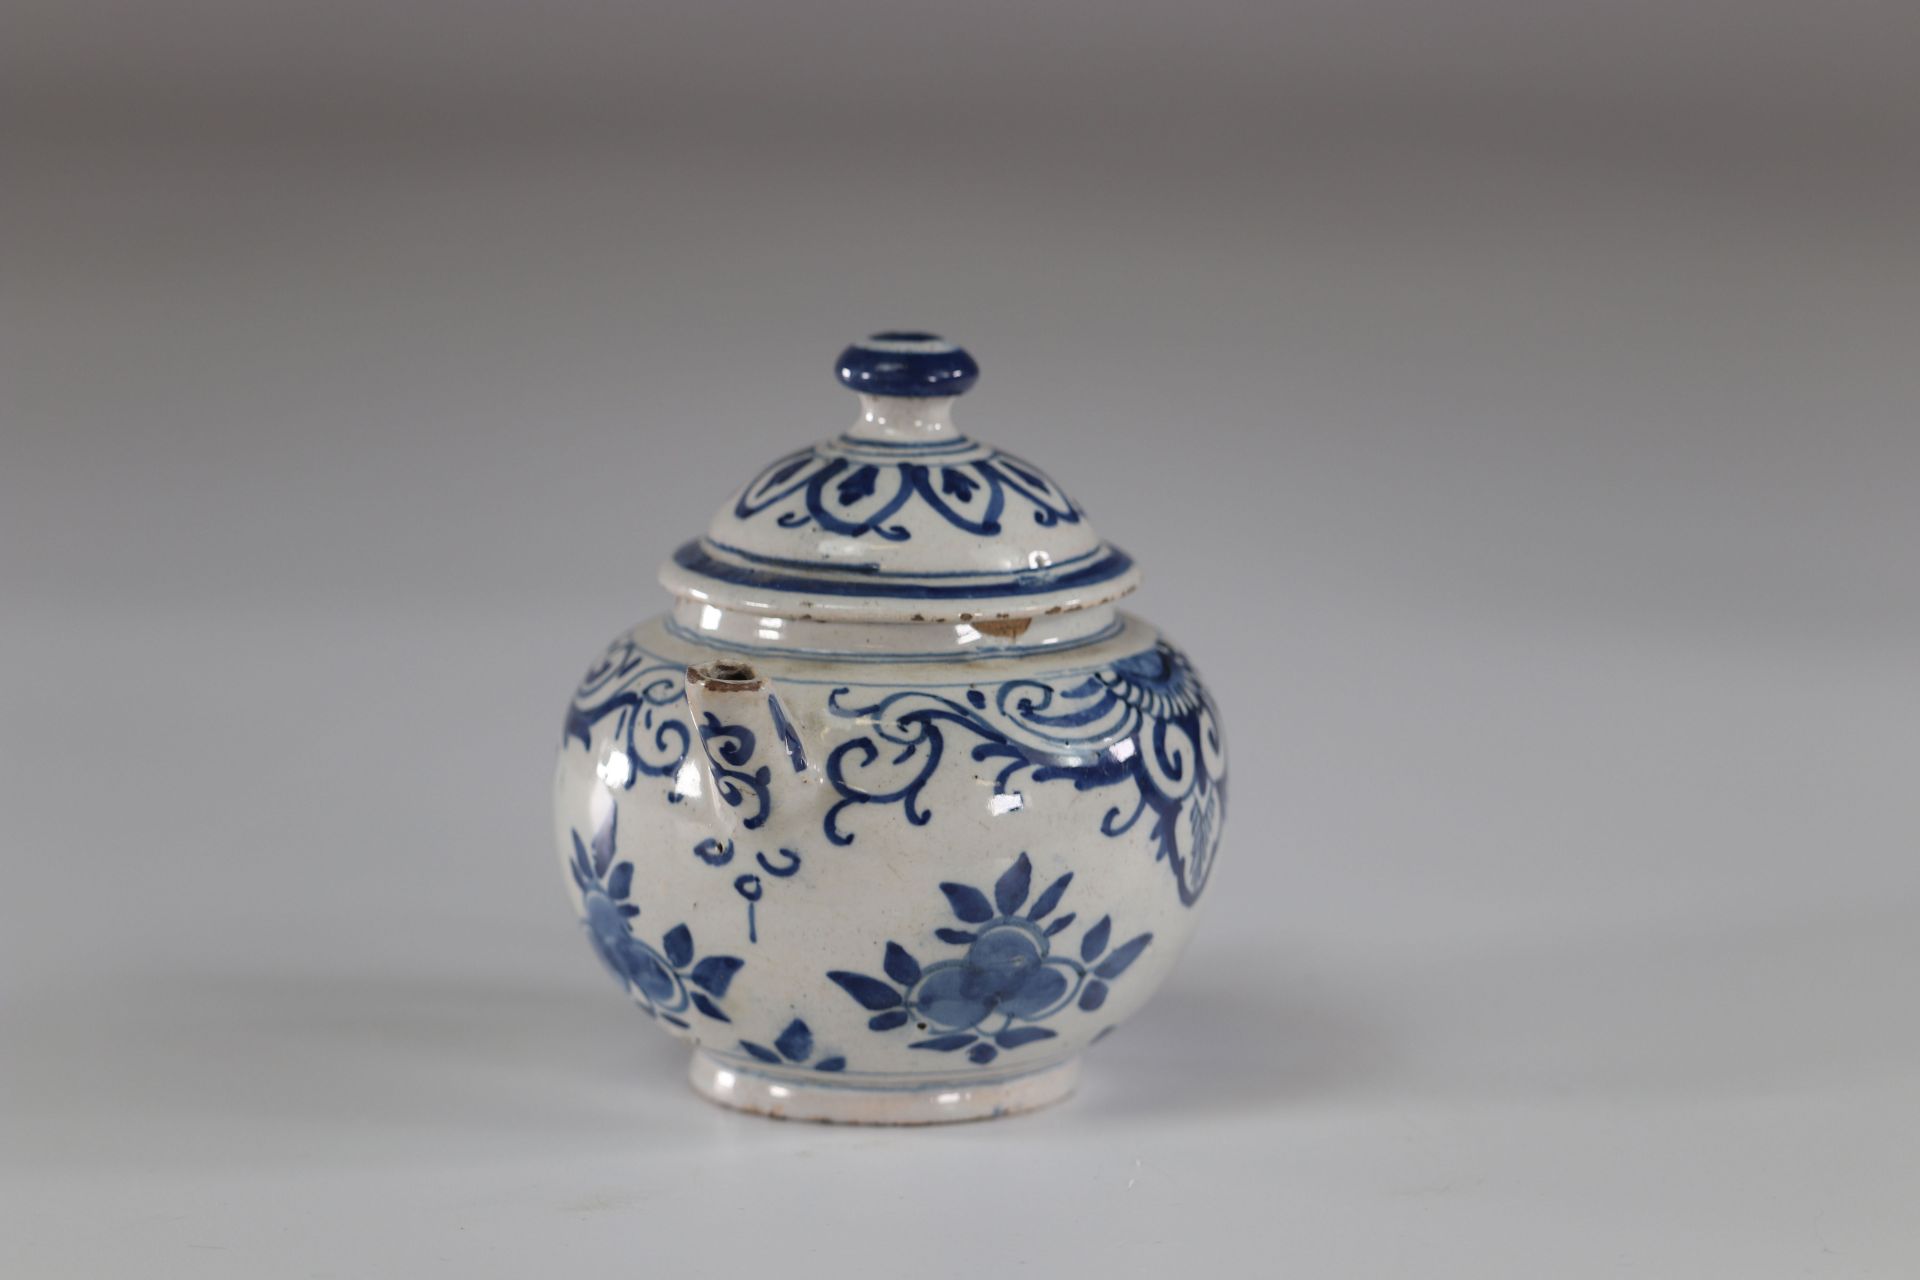 China blue white porcelain teapot - Image 2 of 4